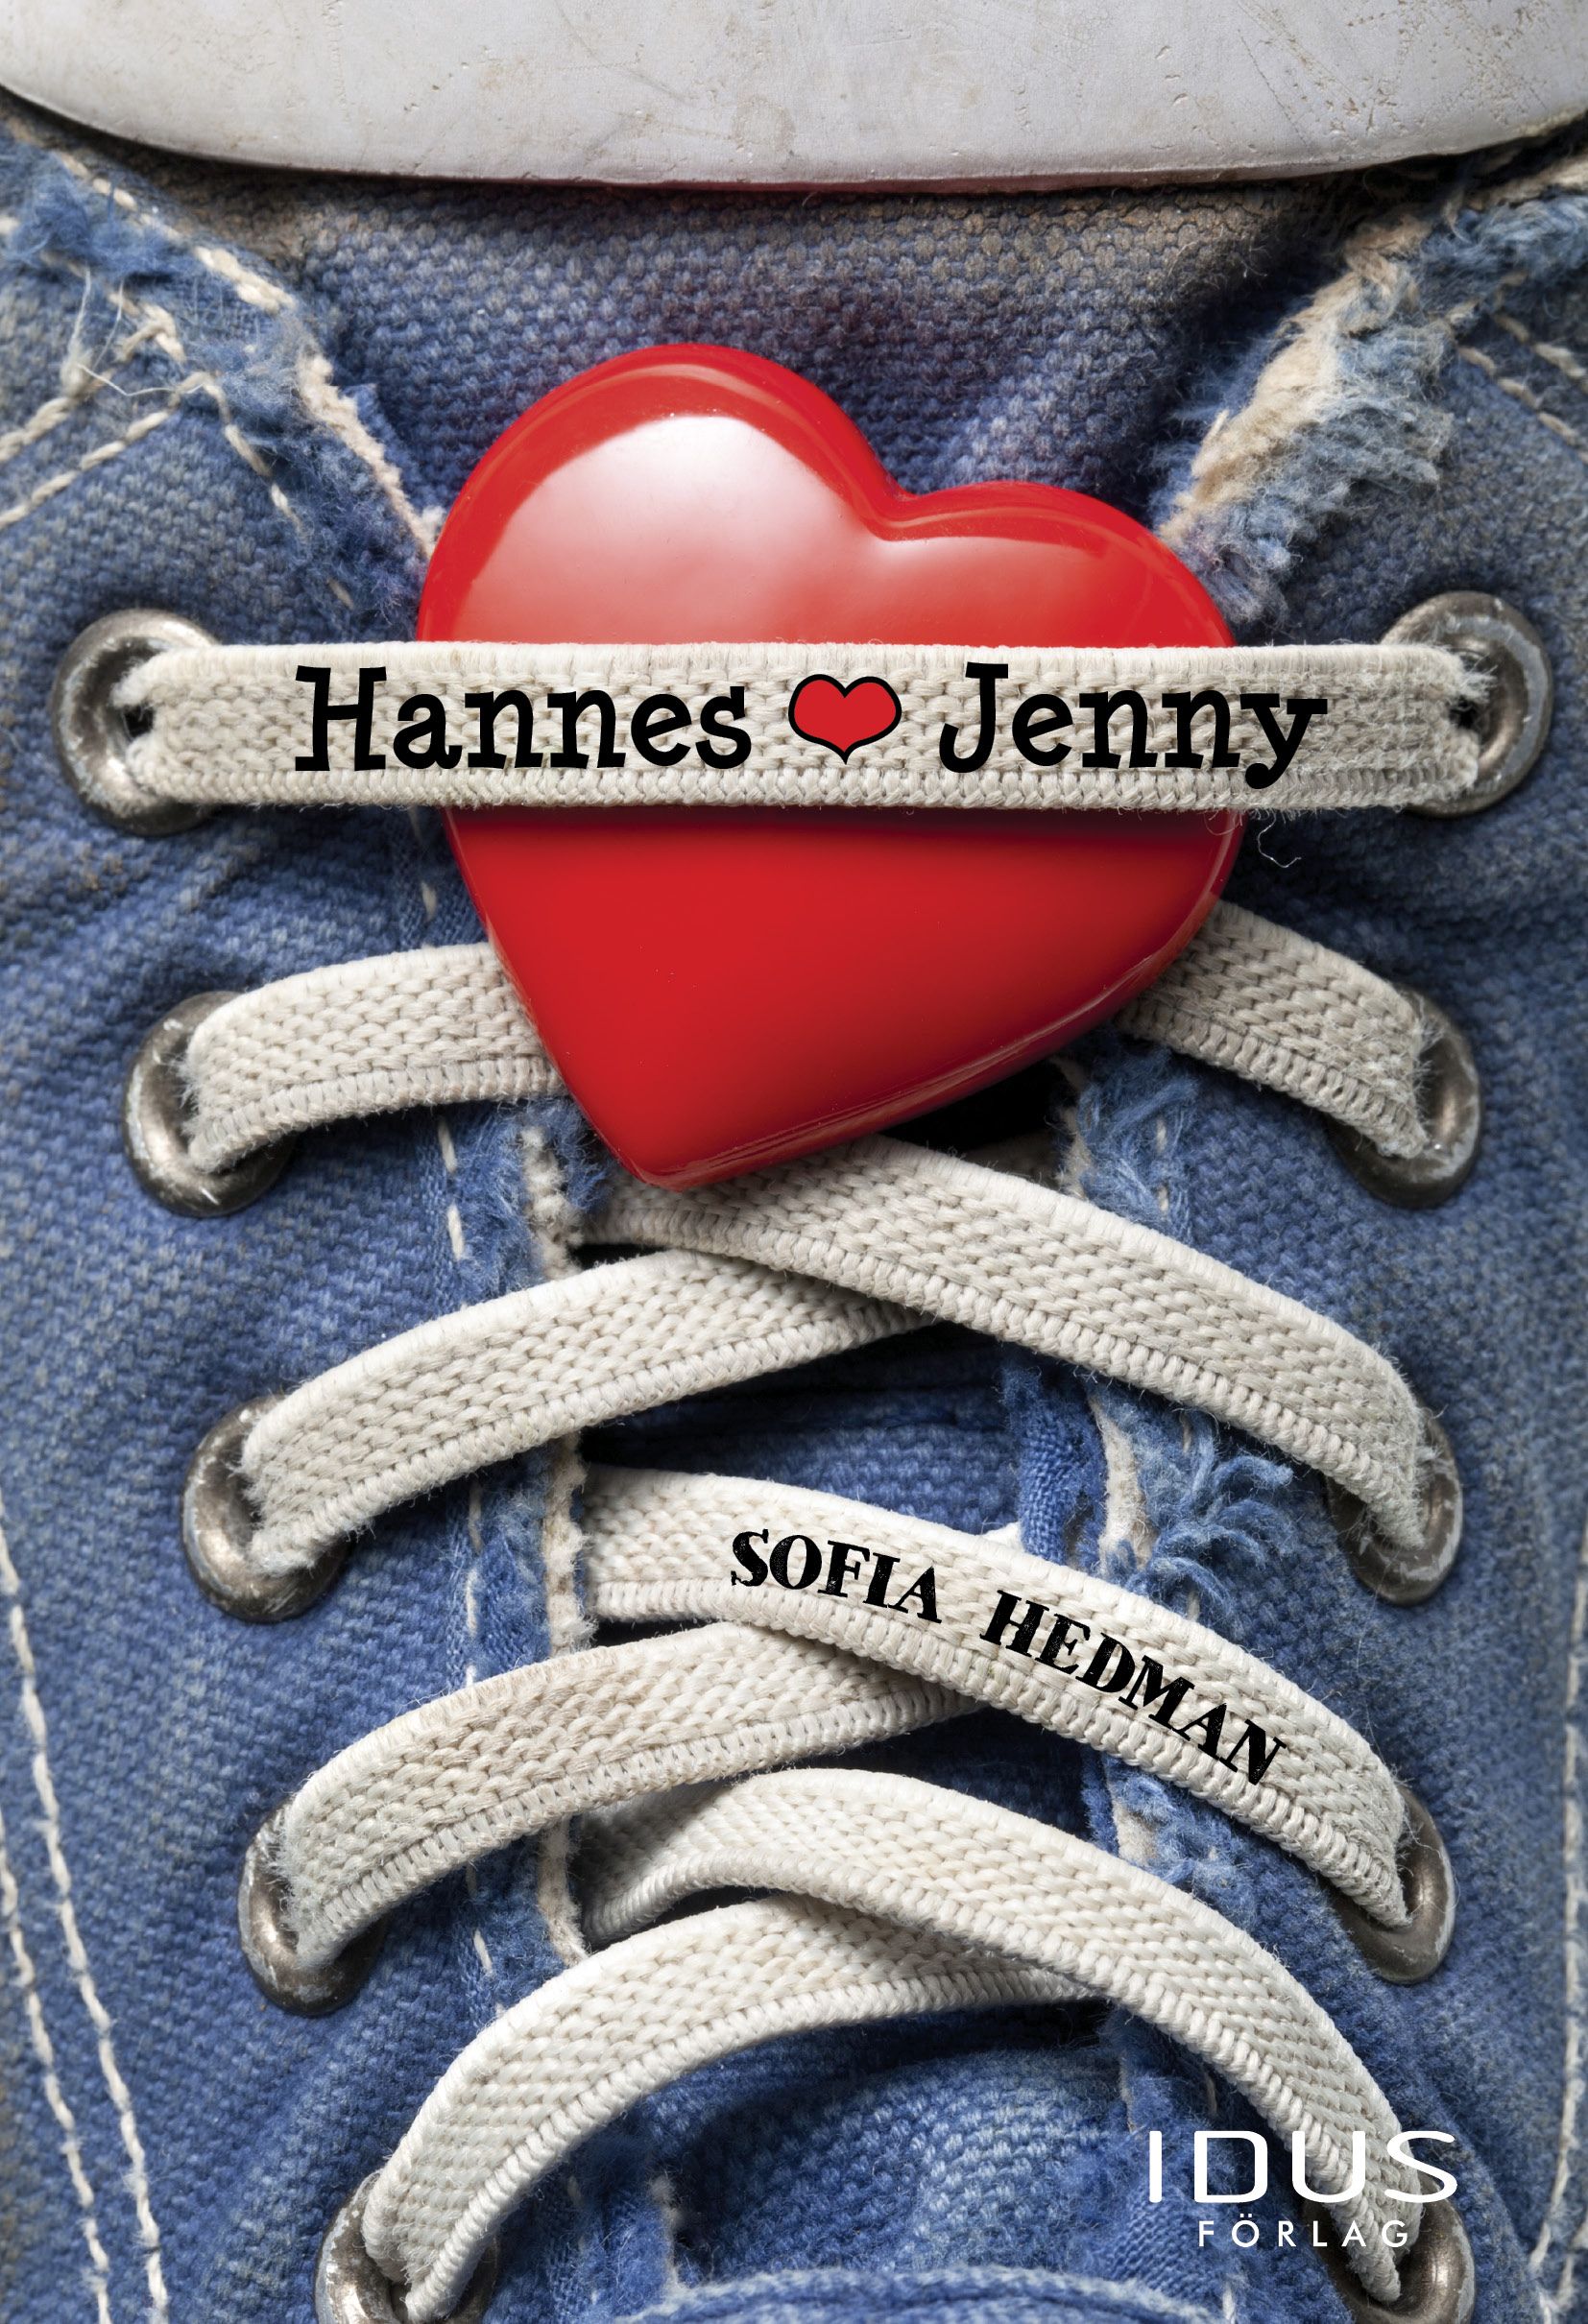 Hannes hjärta Jenny, e-bok av Sofia Hedman